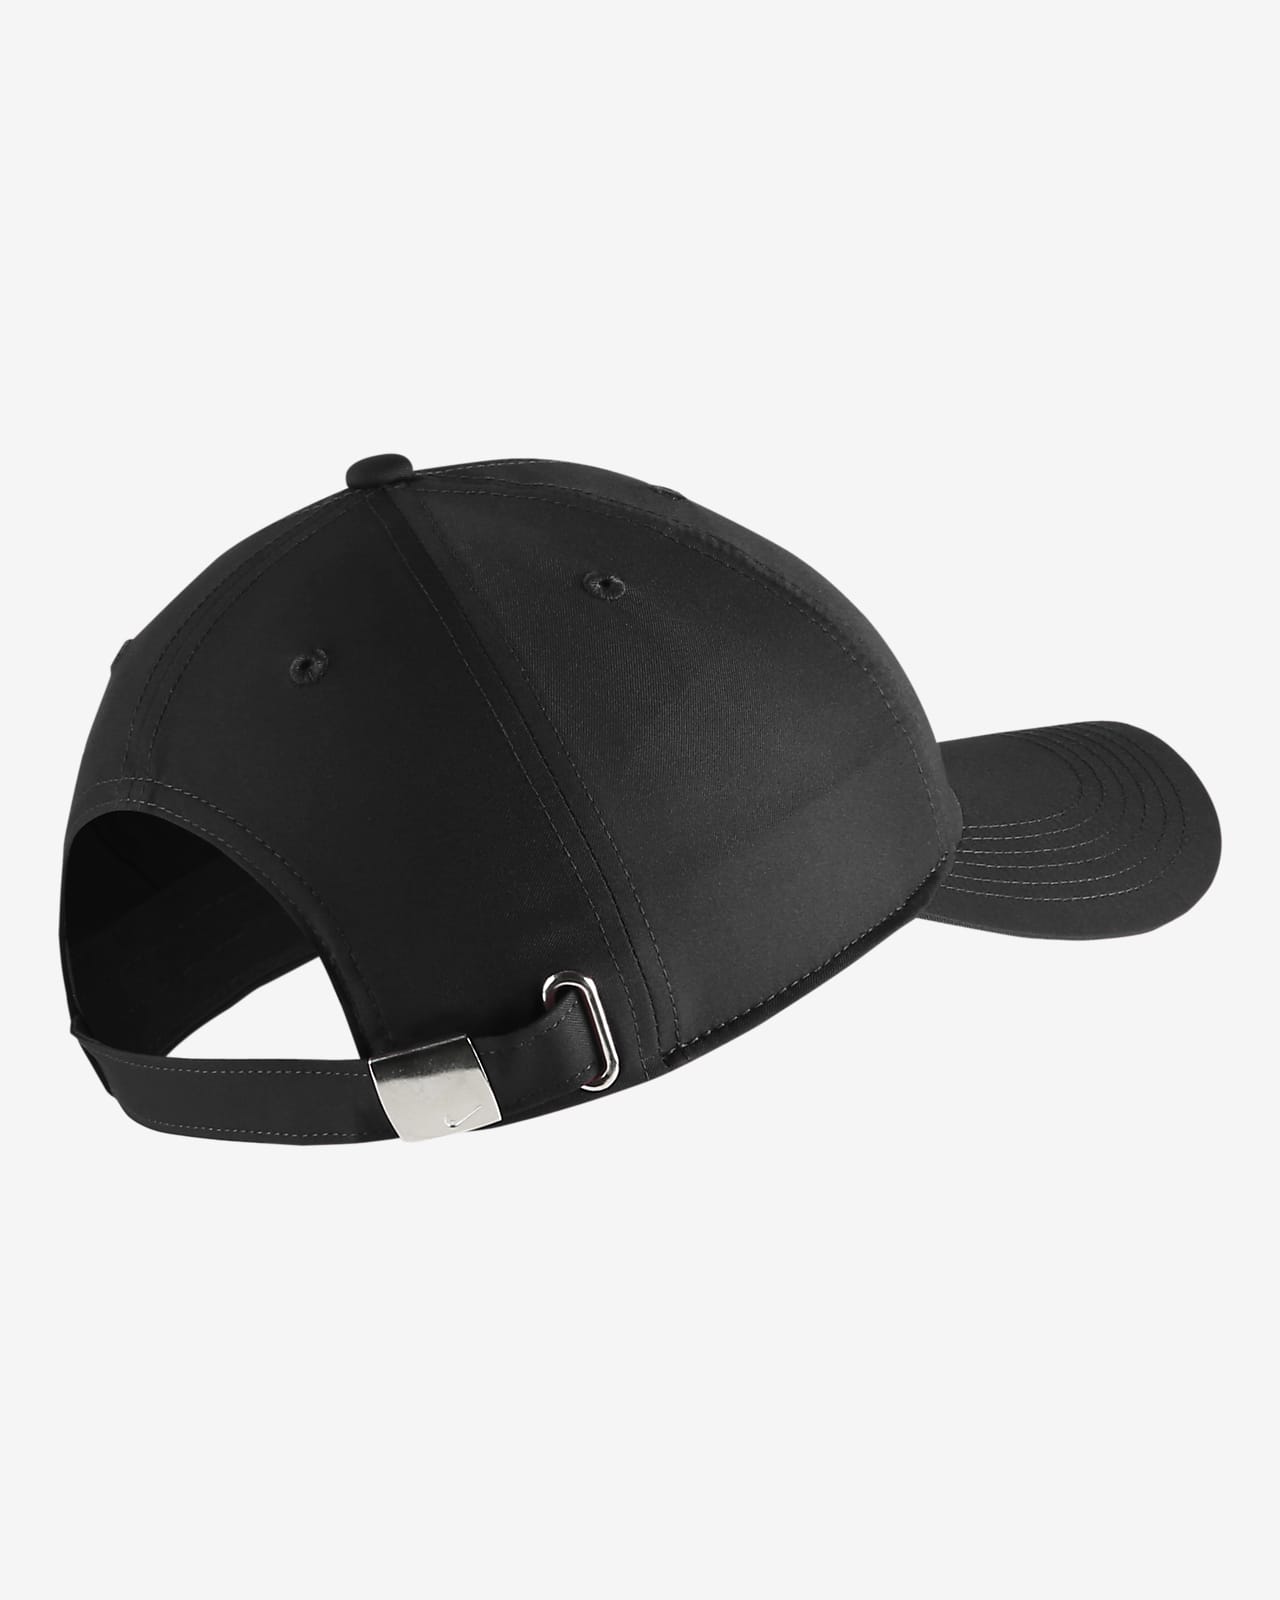 black nike adjustable hat